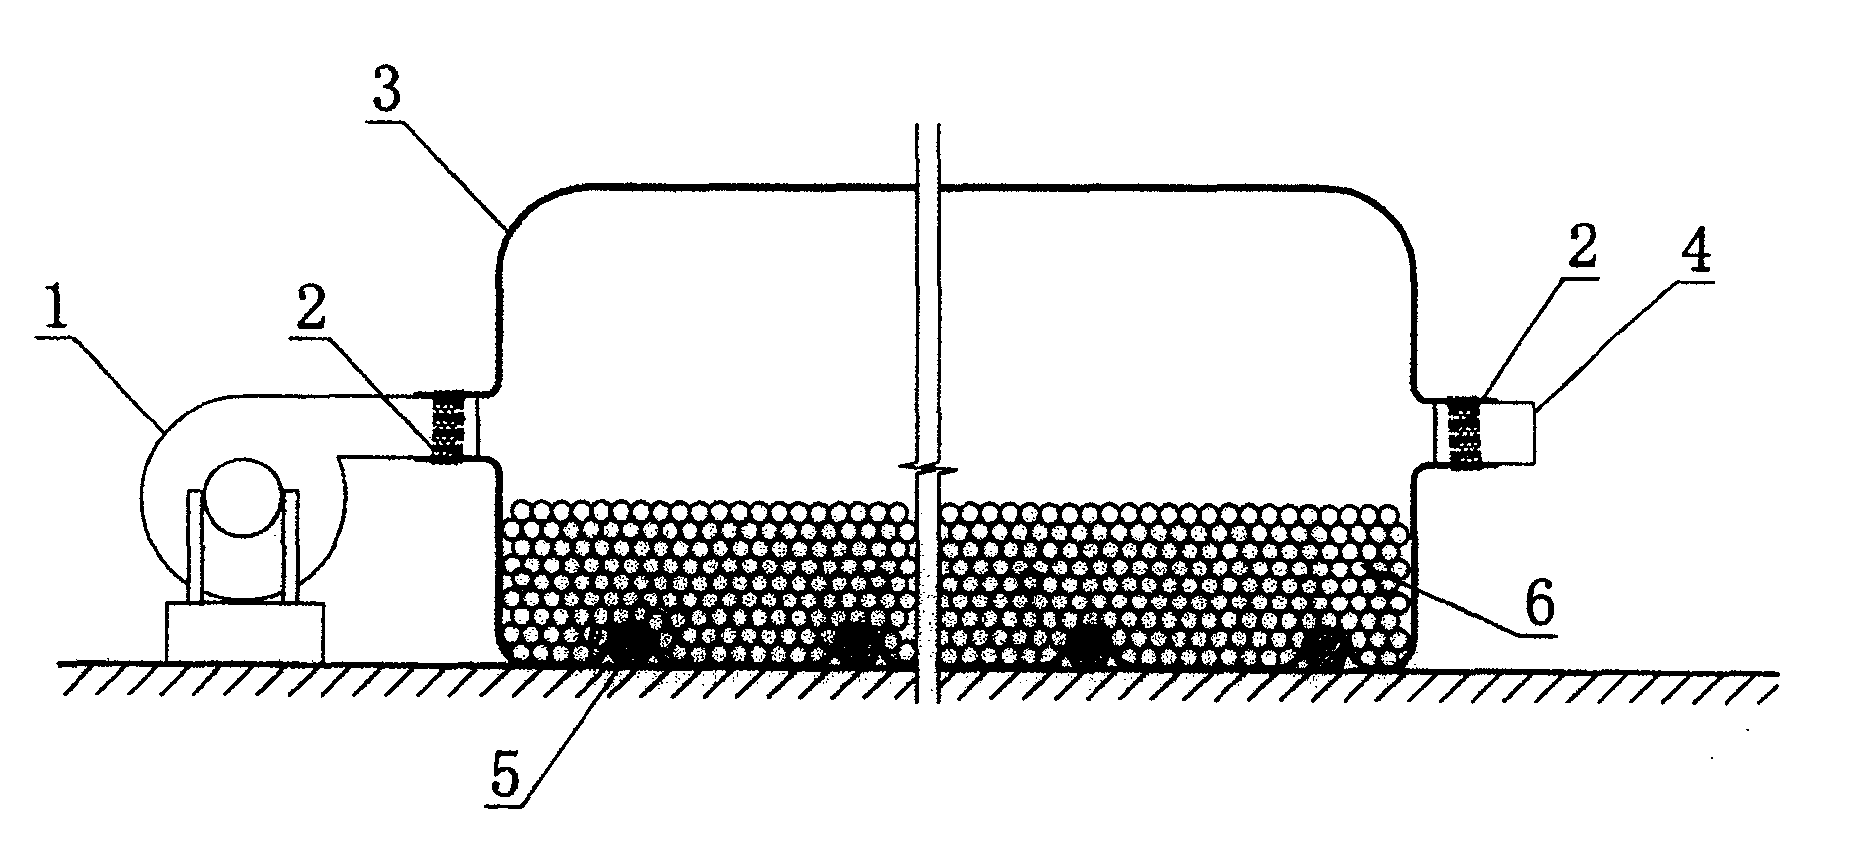 Pipeline type ambient-temp. apparatus for drying Momordica grosvenori